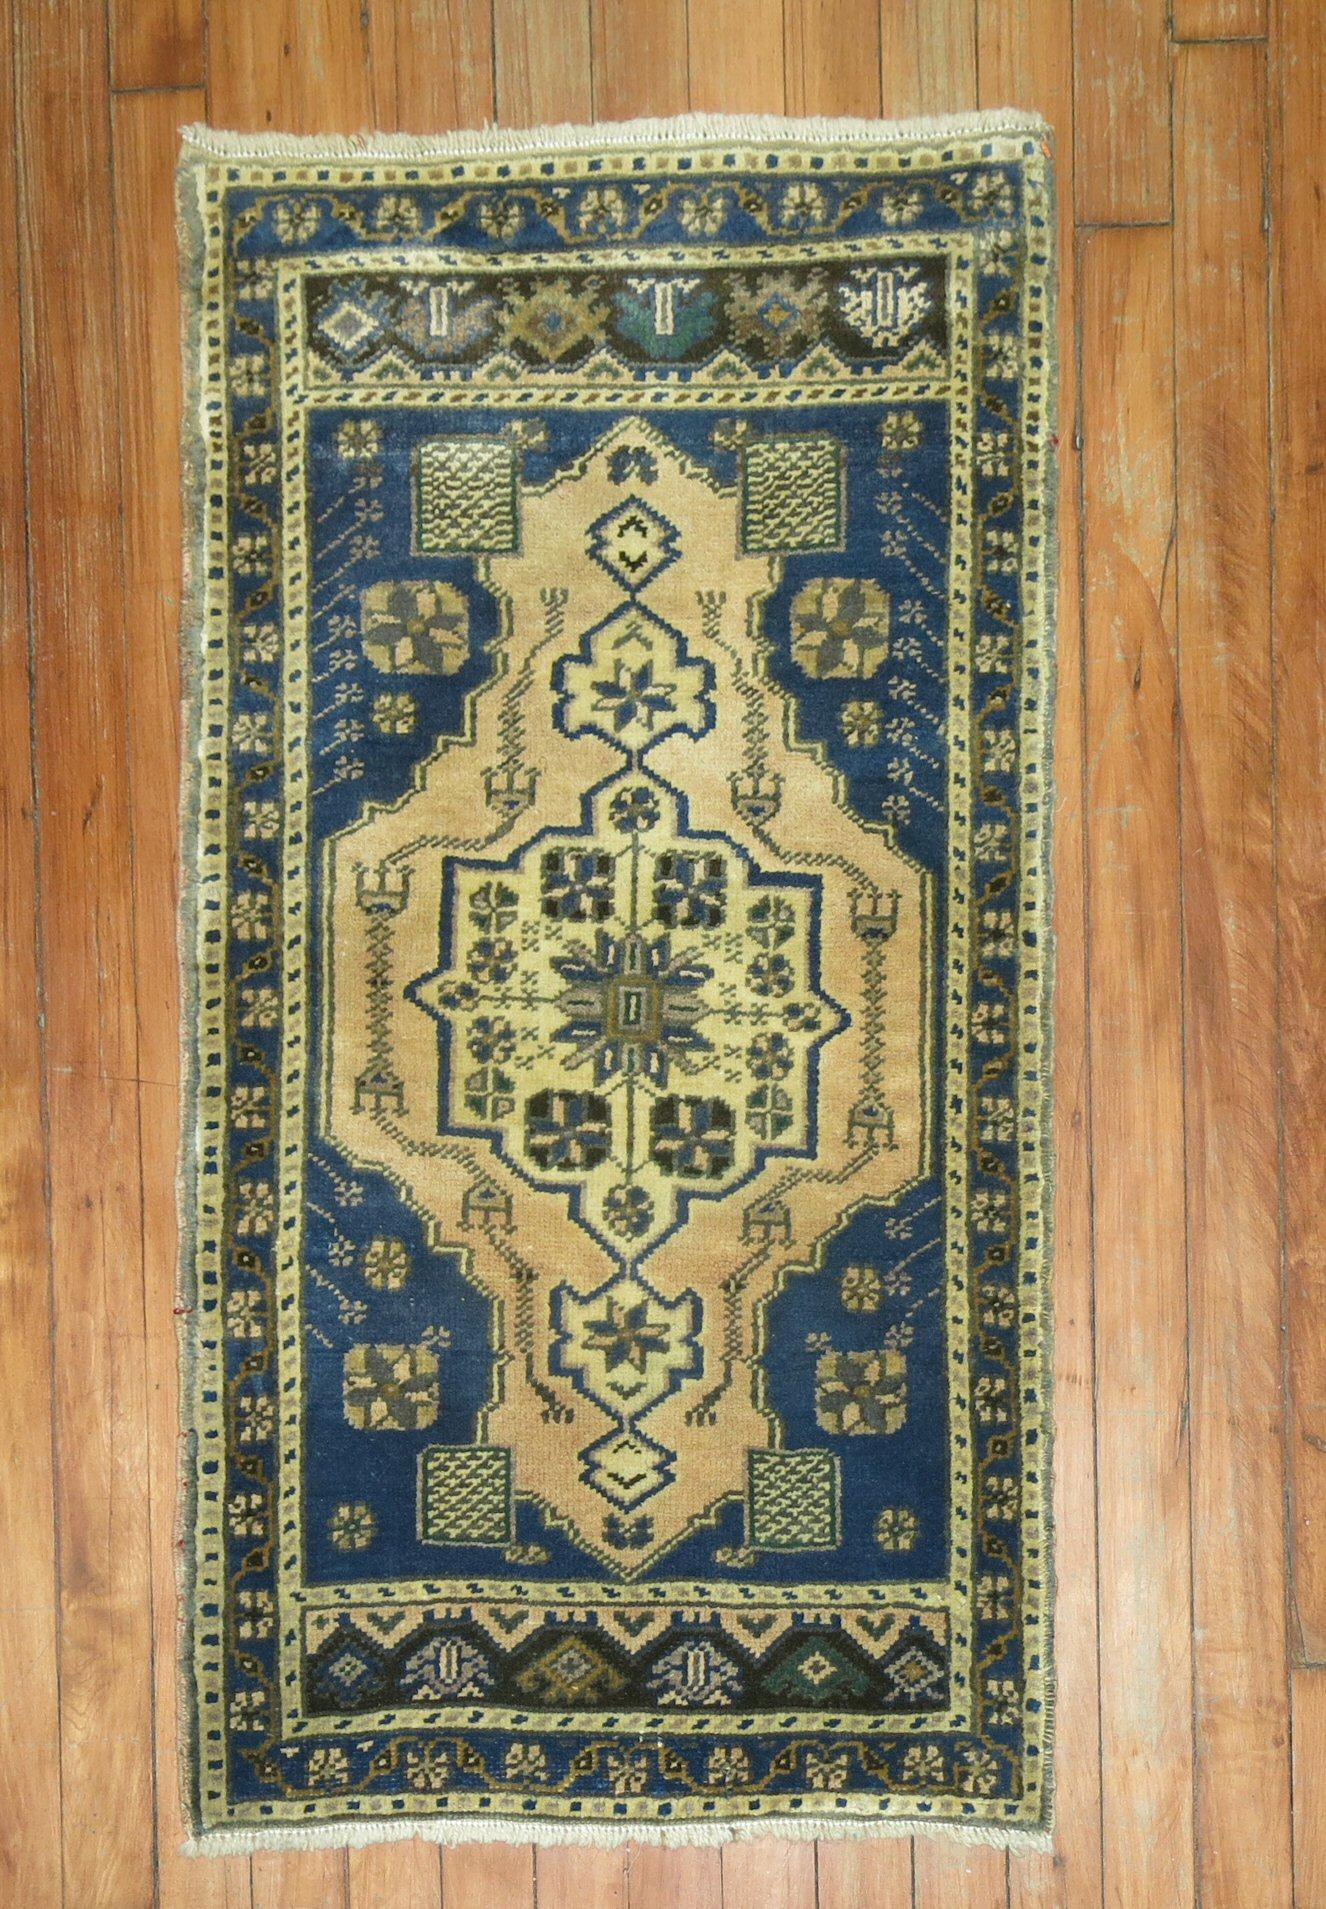 A vintage Anatolian Turkish Yastik rug mat 

Measures: 1'9” x 3'7”